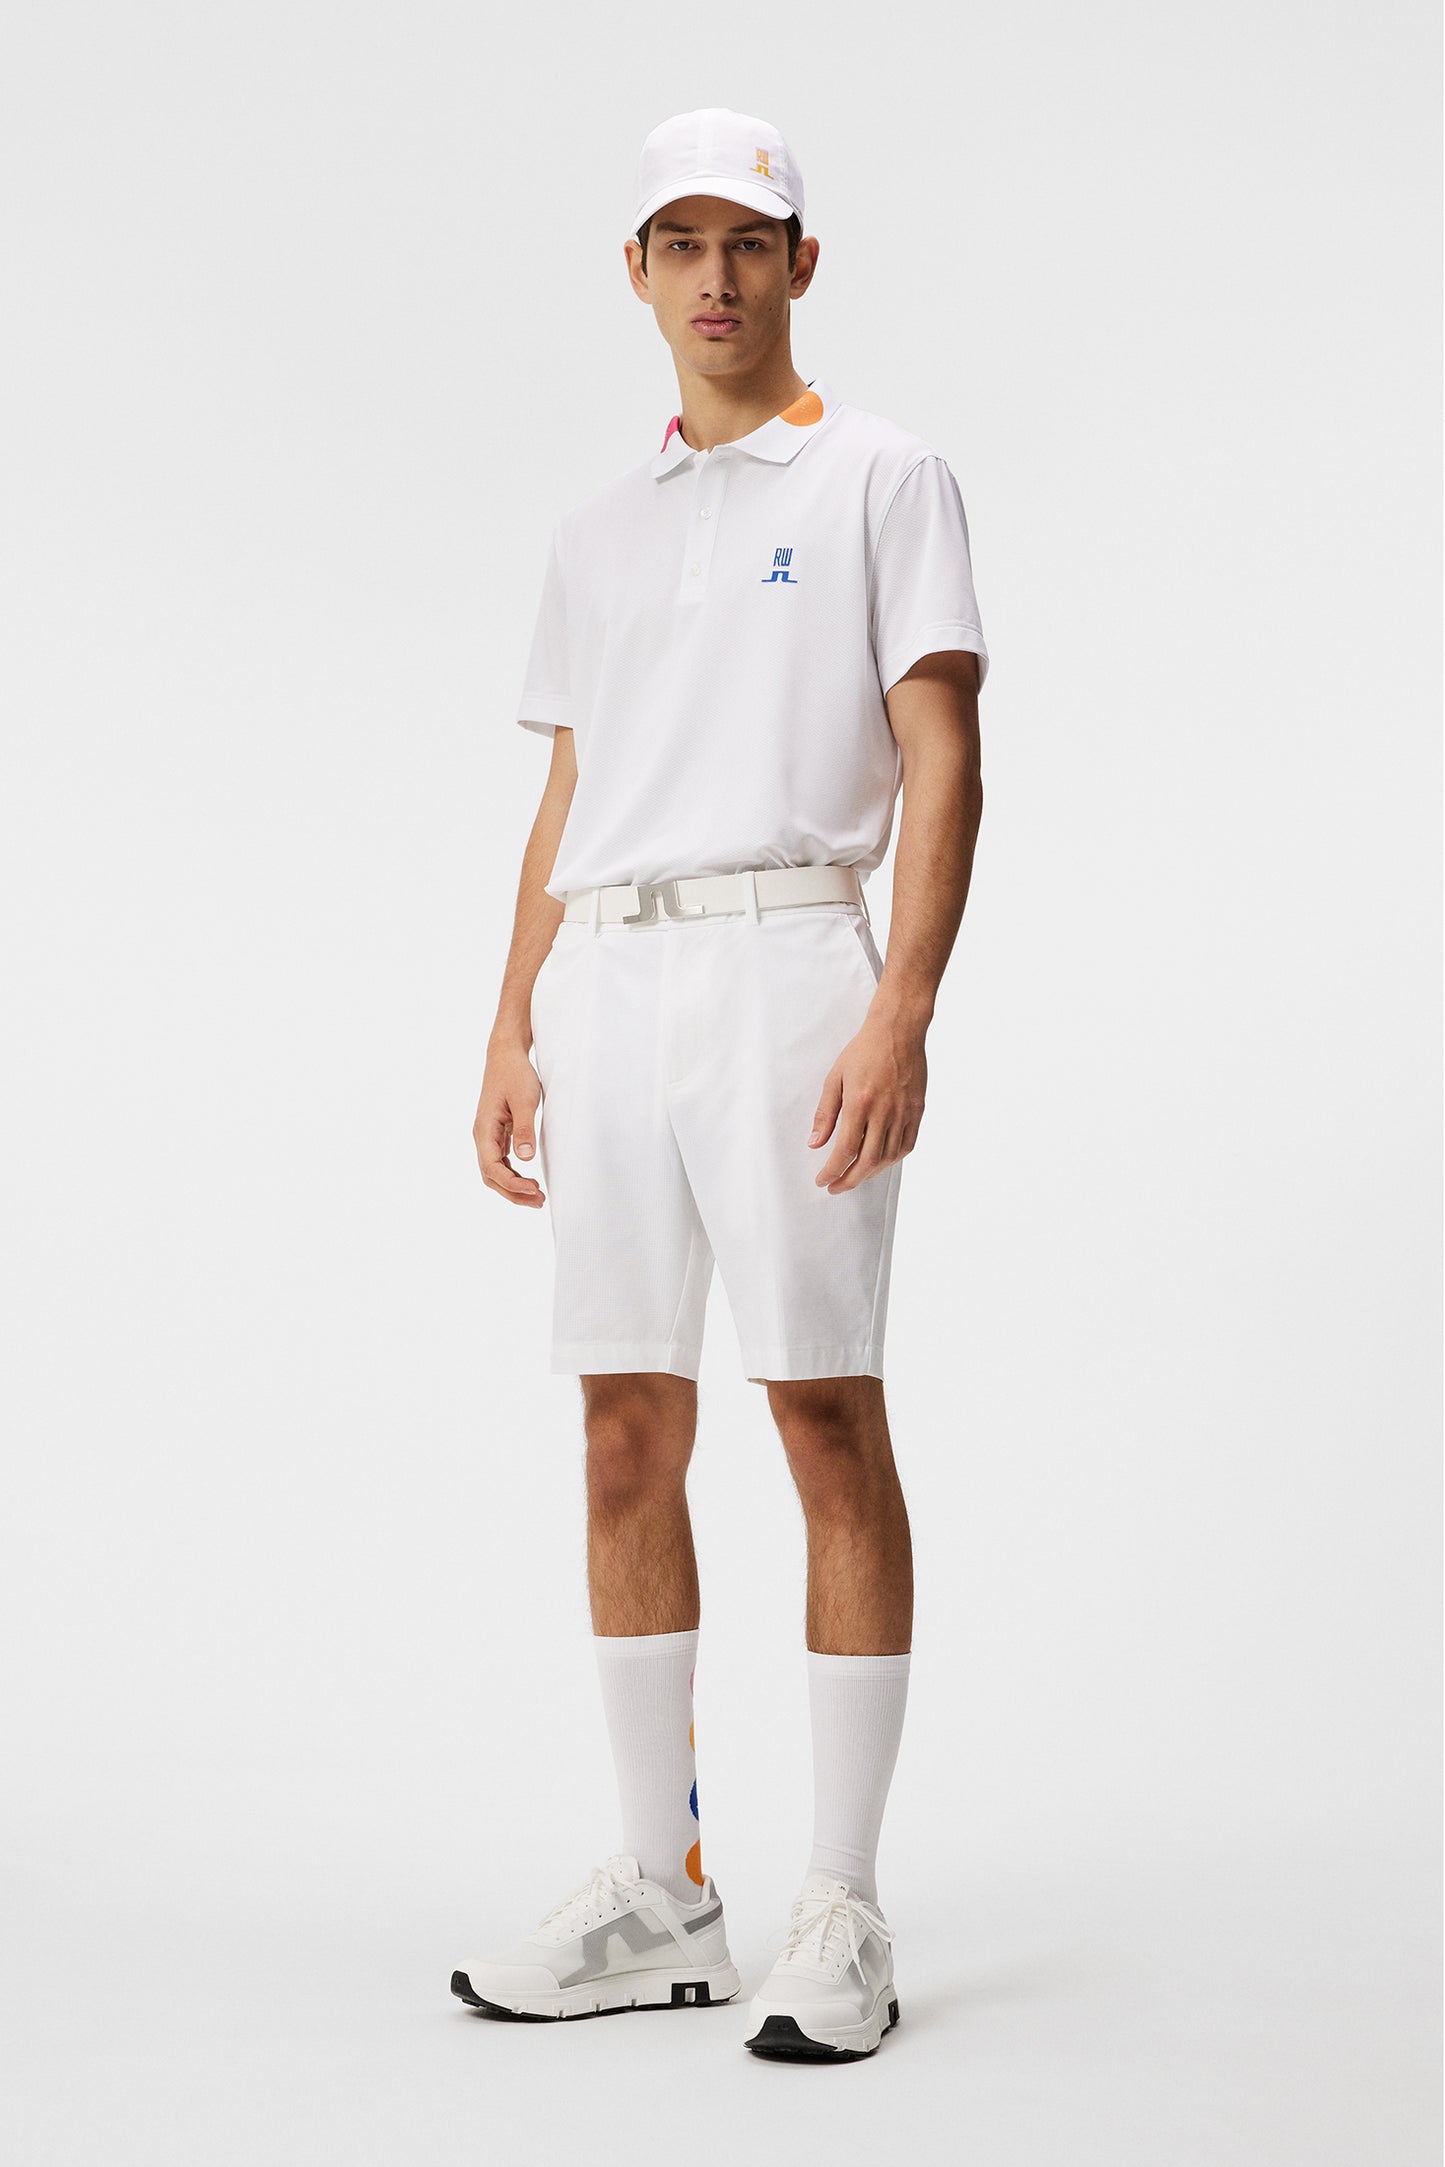 RW Tech Mesh Polo Shirt / White